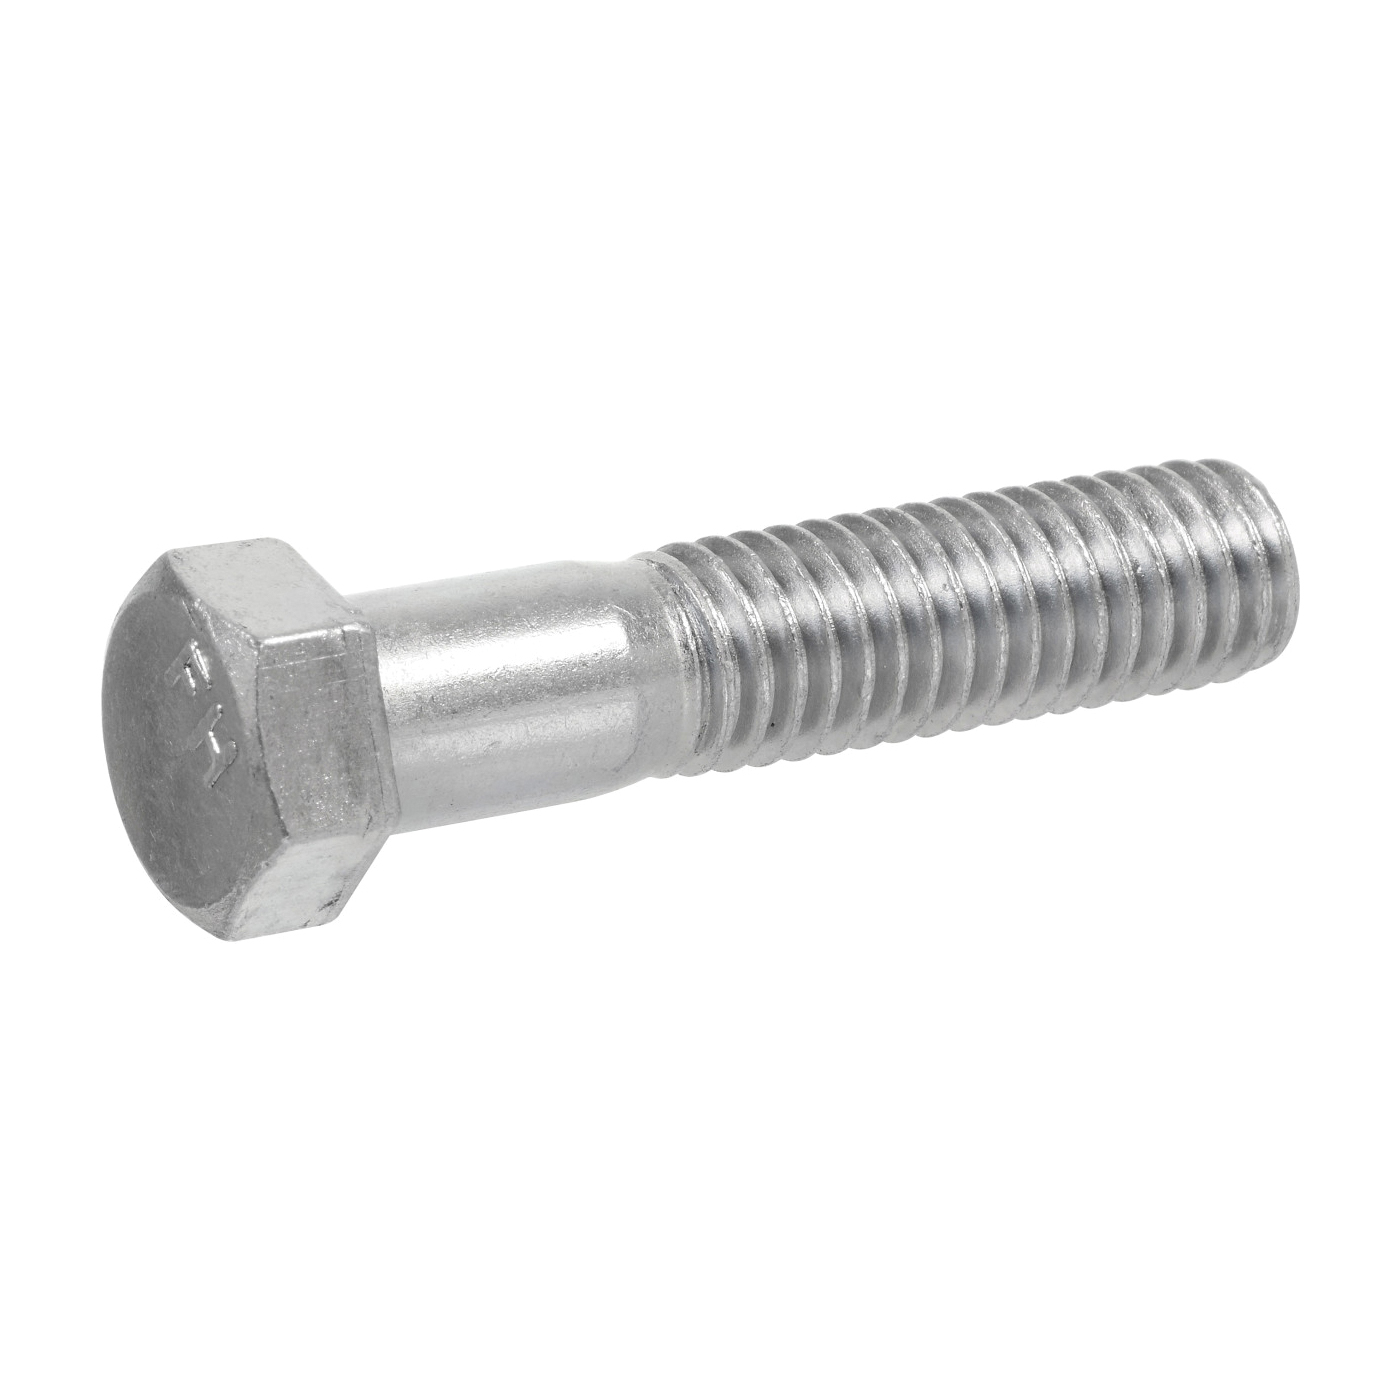 880669 Hex Bolt, M7-1 Thread, 30 mm OAL, 8.8 Grade, Steel, Zinc-Plated, Metric Measuring, Fine Thread